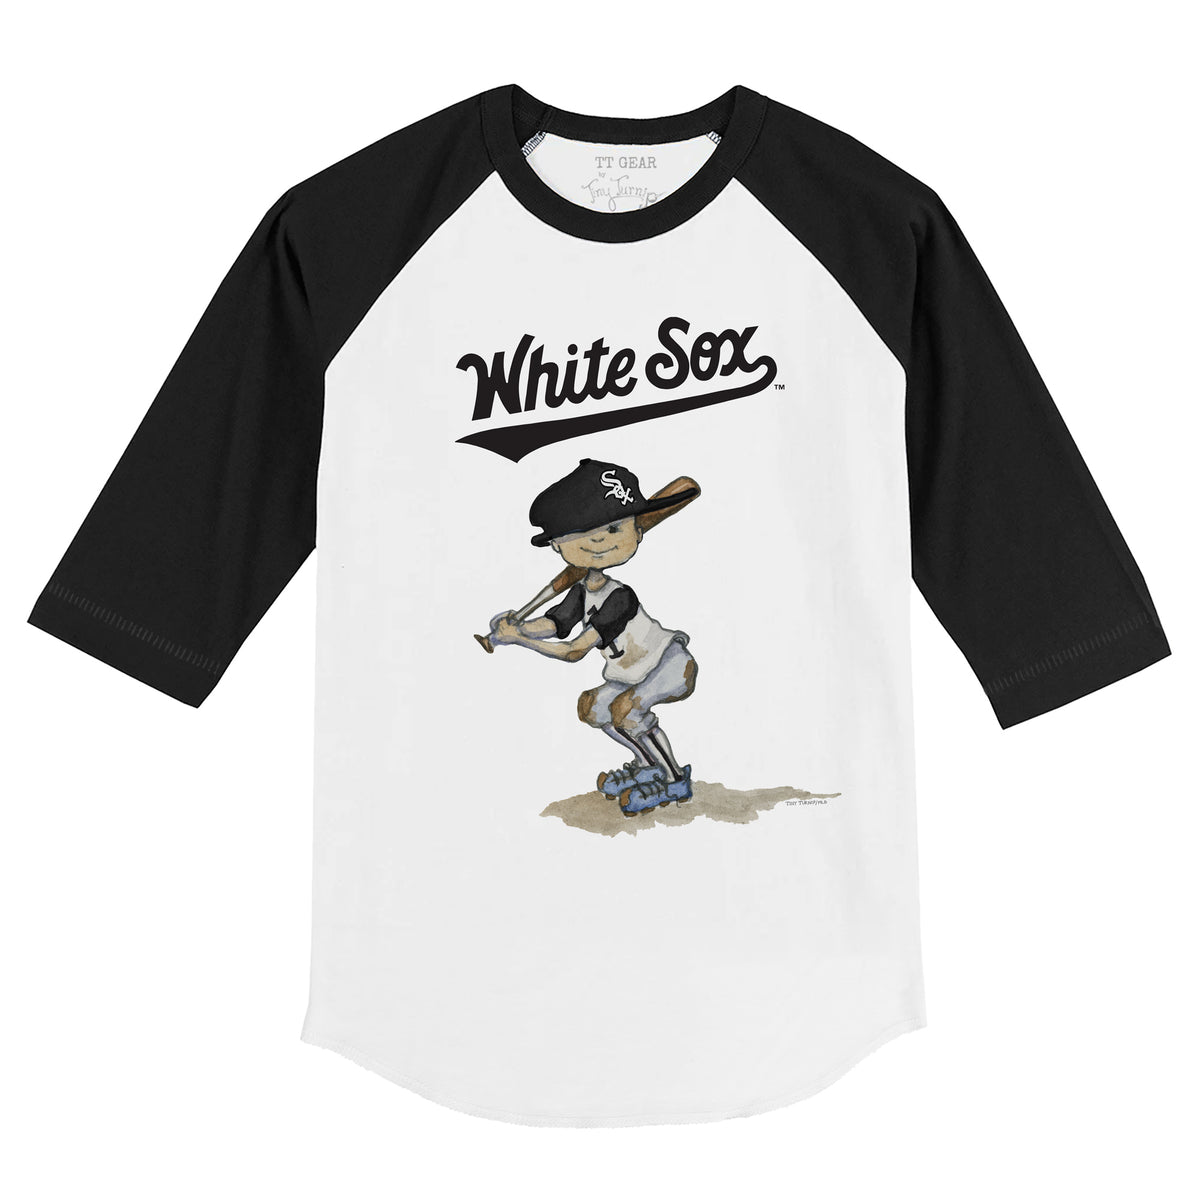 Chicago White Sox Jersey Youth Medium 10/12 Stitched Blank Black & White